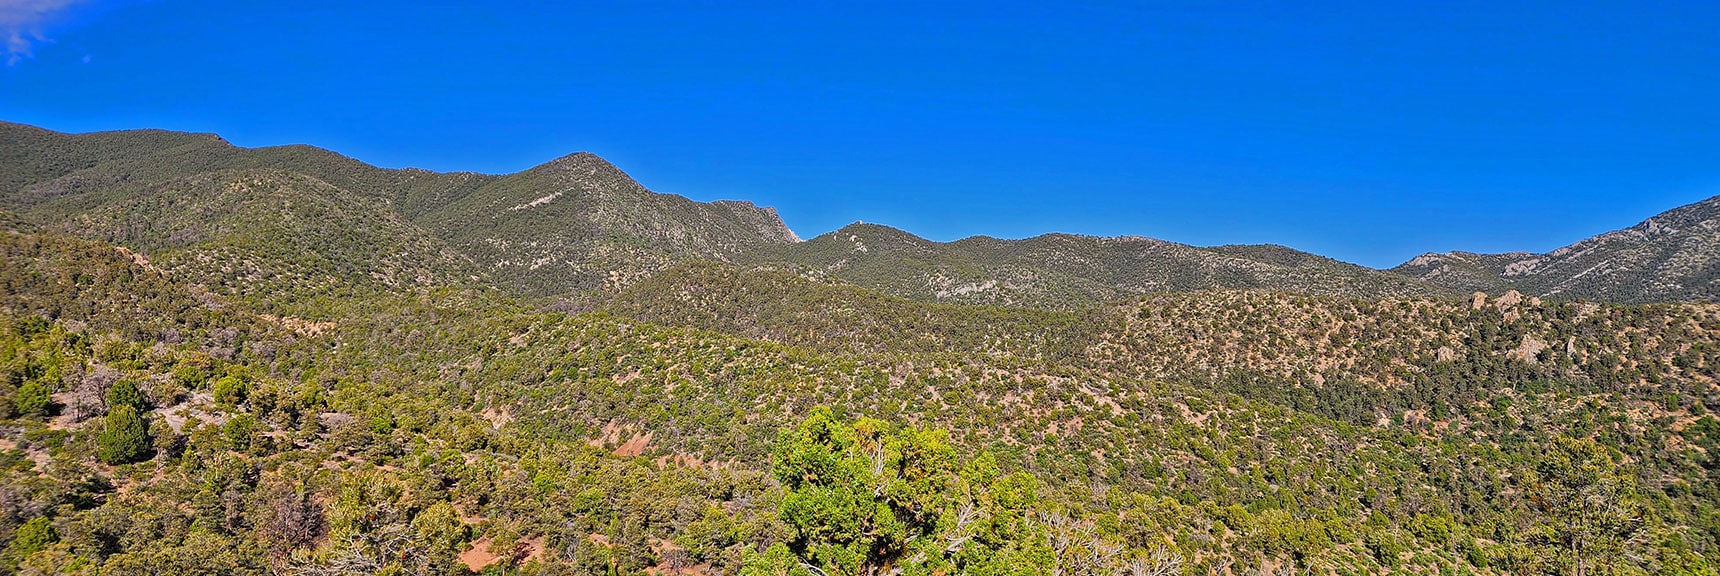 Ridgeline Further South of the Wilson Ridge South High Point. | Wilson Ridge South High Point | Lovell Canyon, Nevada